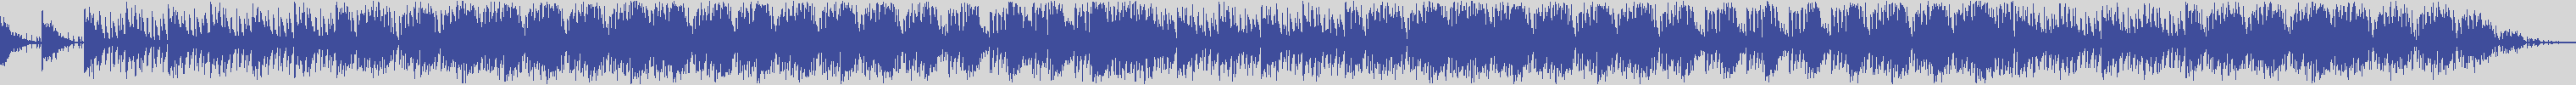 noclouds_chillout [NOC015] Bennie Bos - September [Fresh Trumpet Mix] audio wave form